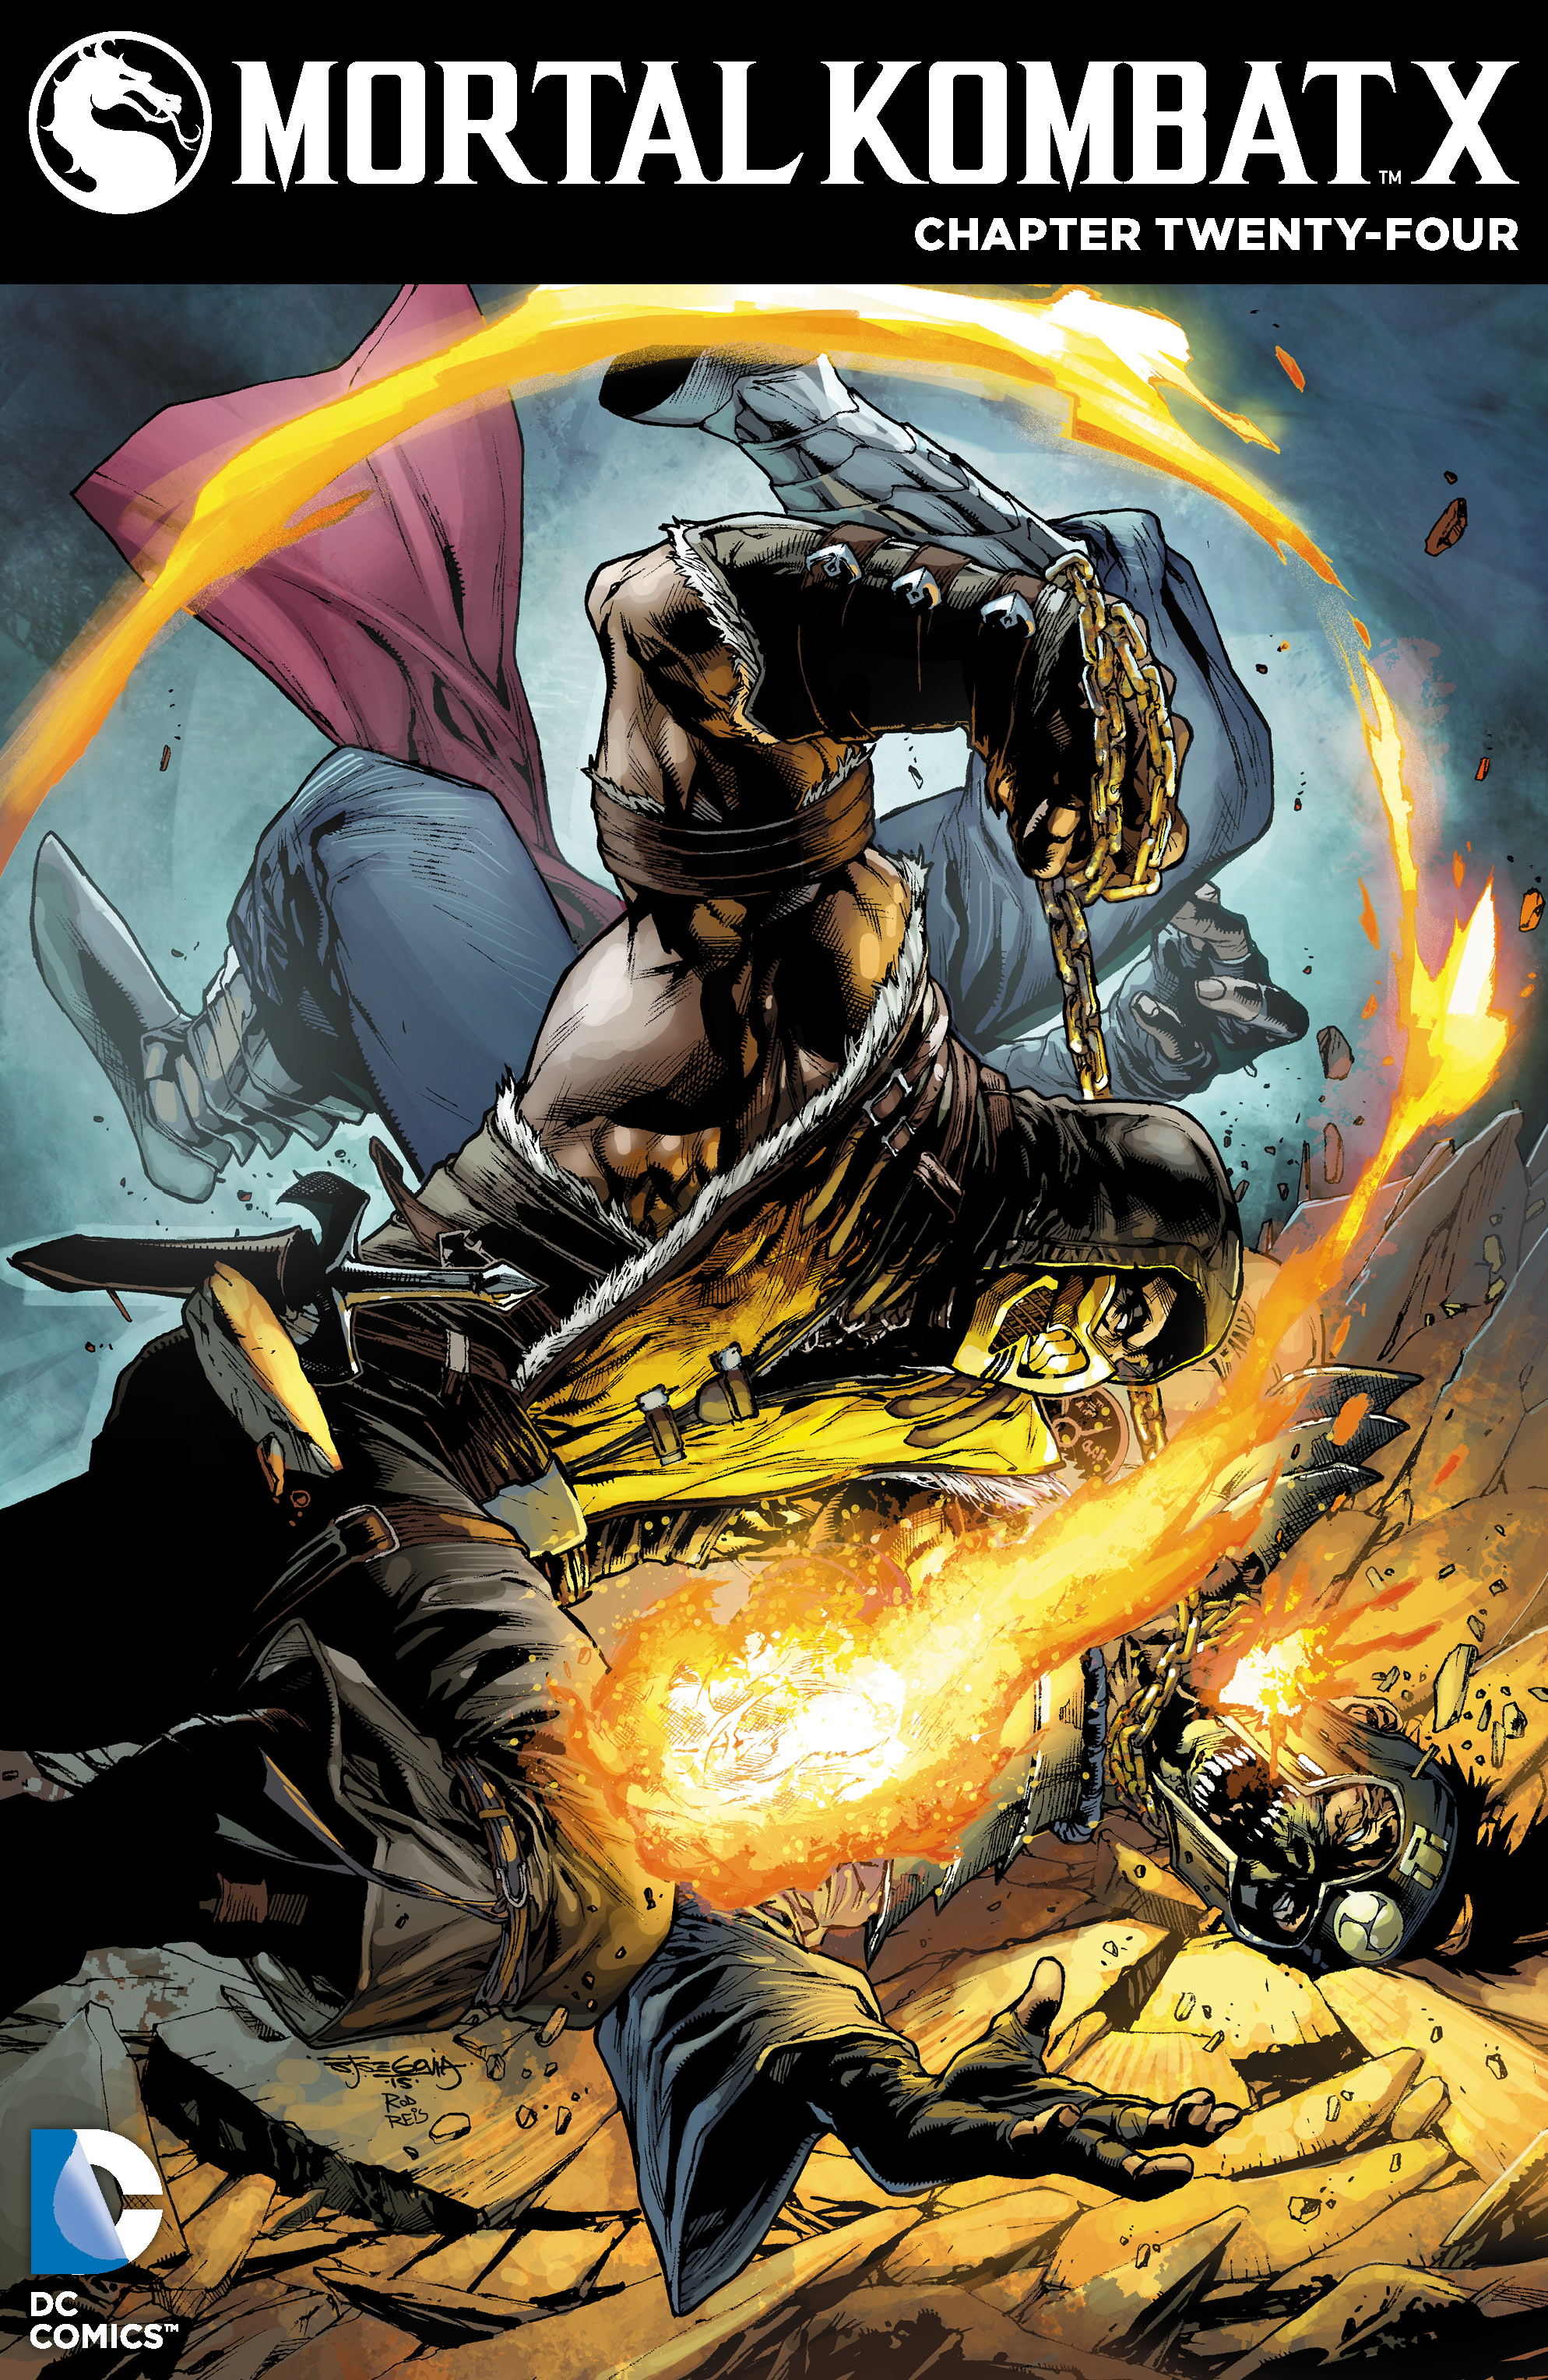 Mortal Kombat X #24 preview images